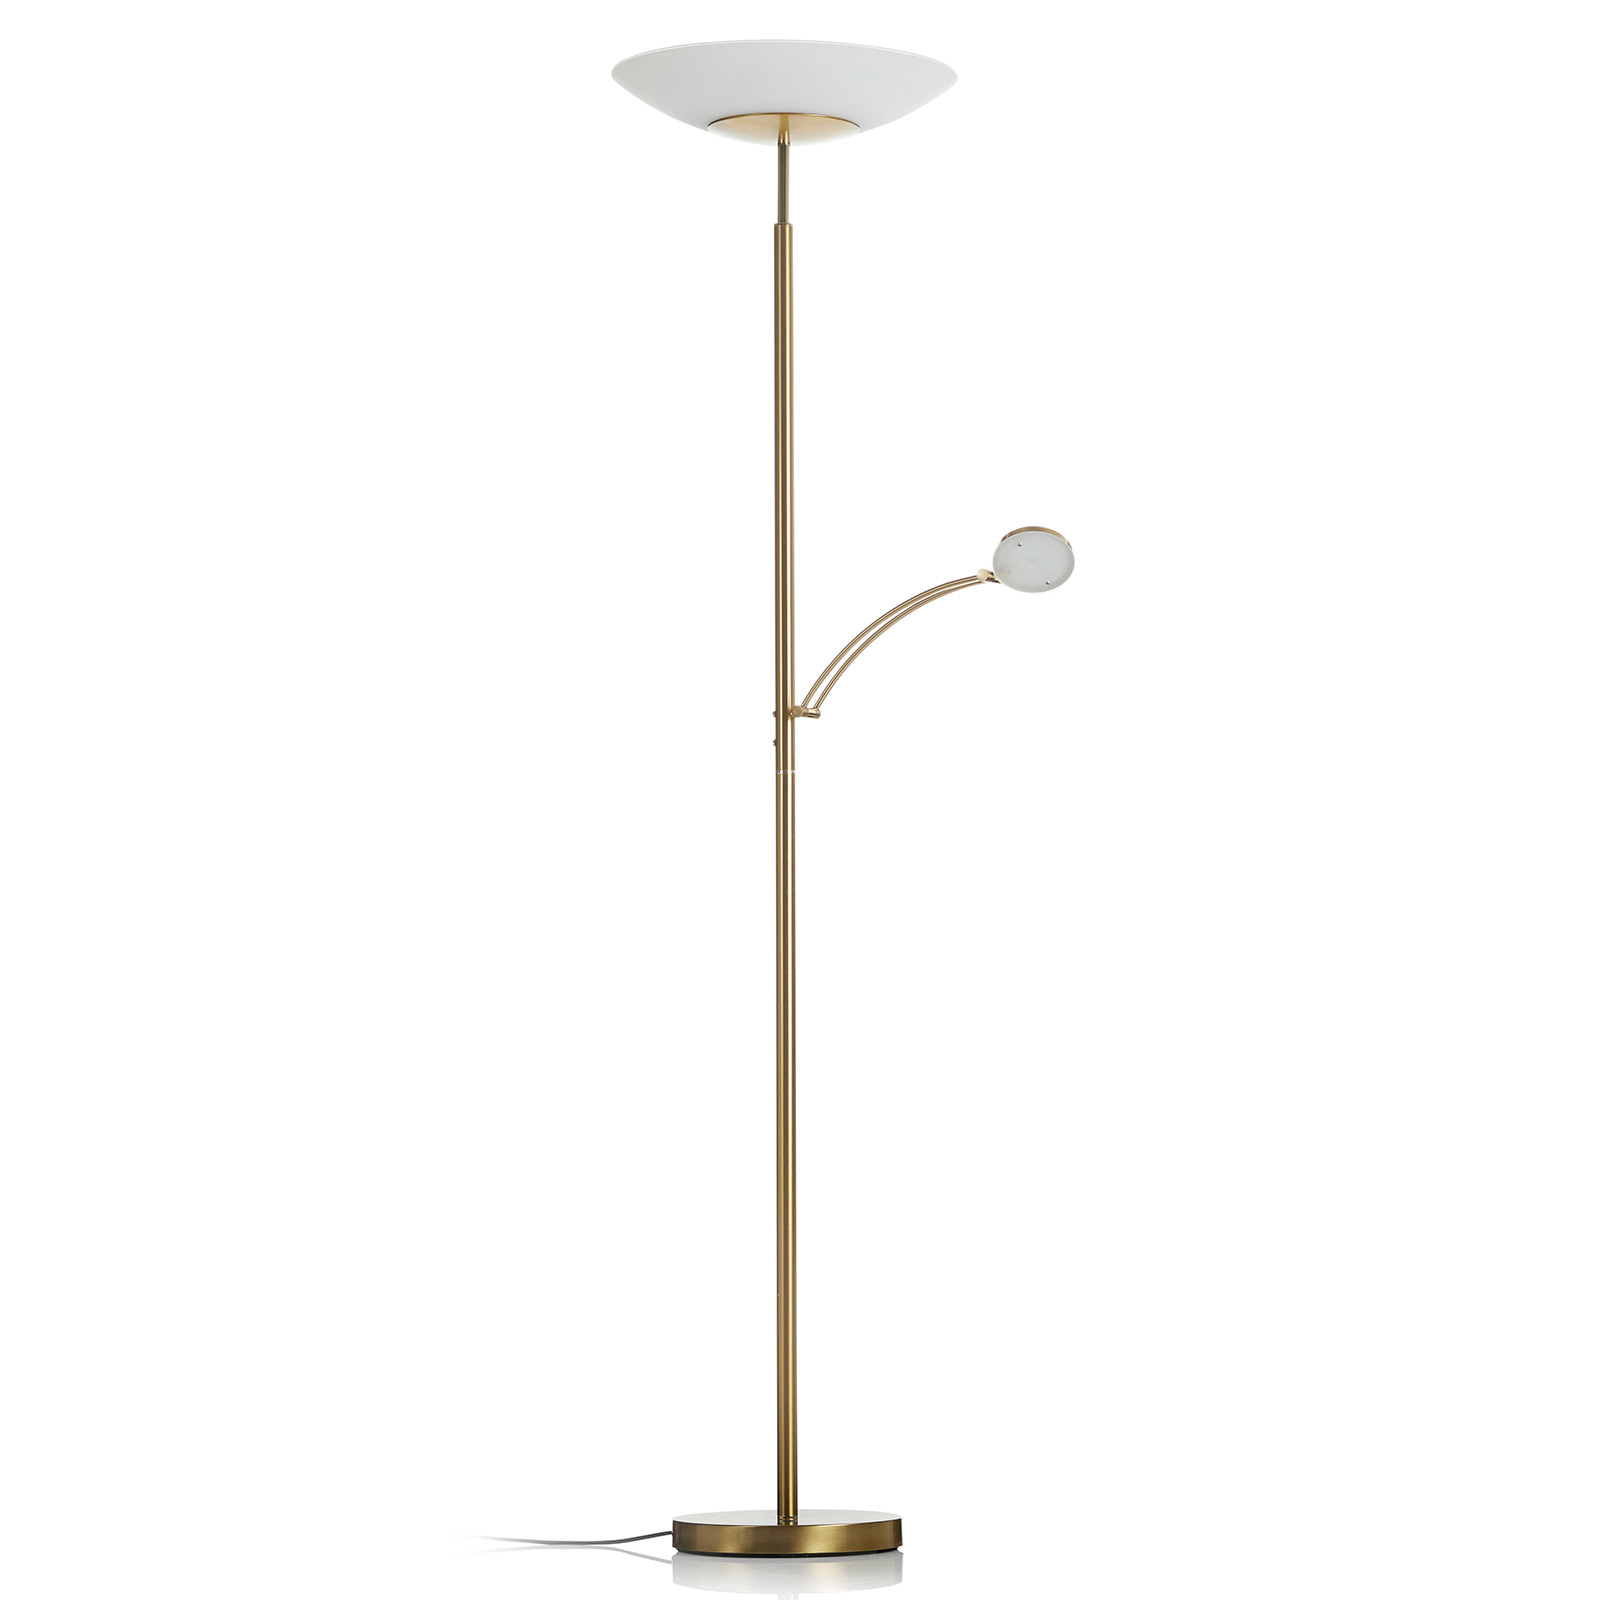 Paul Neuhaus Alfred LED uplighter vloerlamp, messing